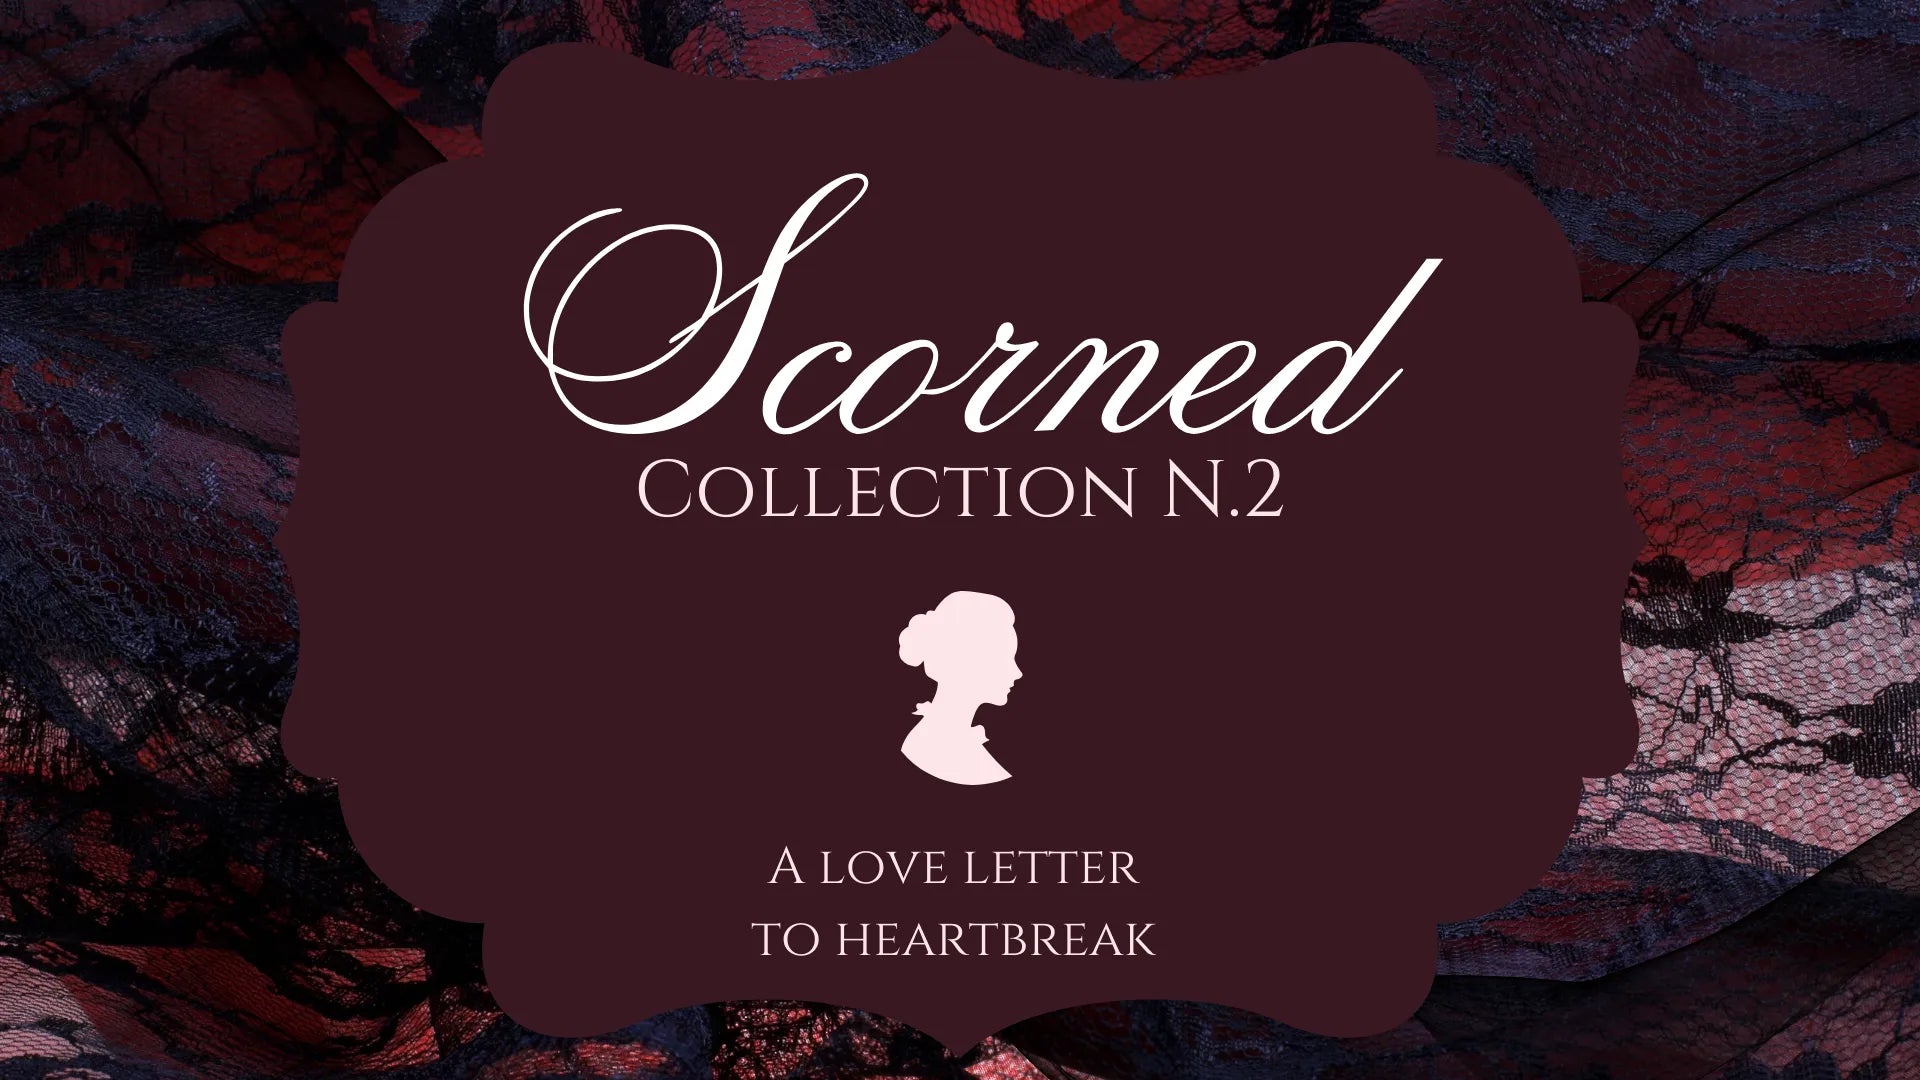 Scorned - Collection N.2: A Love Letter To Heartbreak